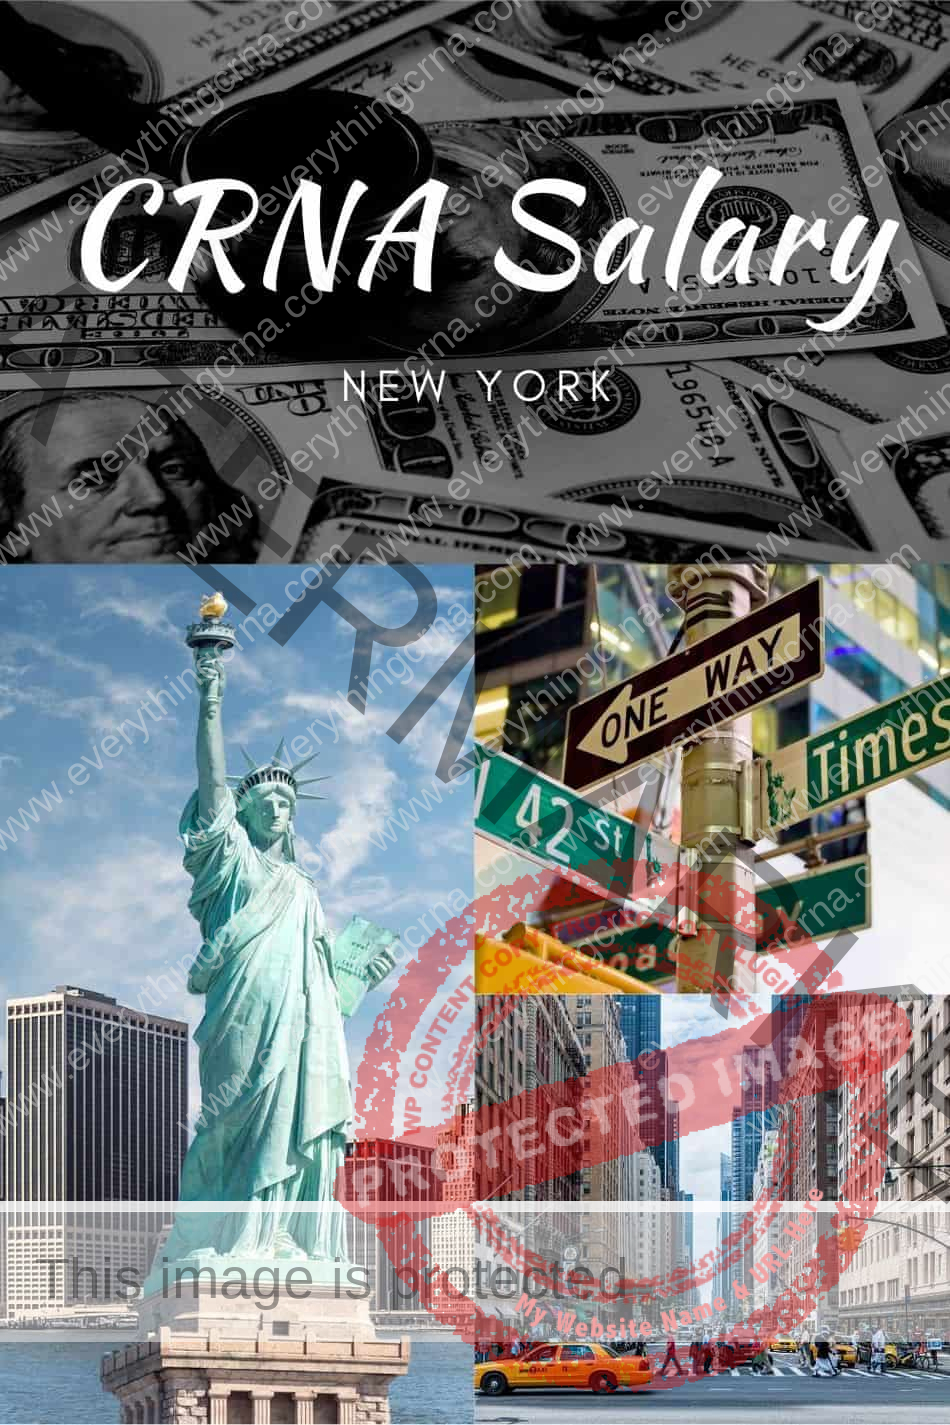 CRNA Salary in New York